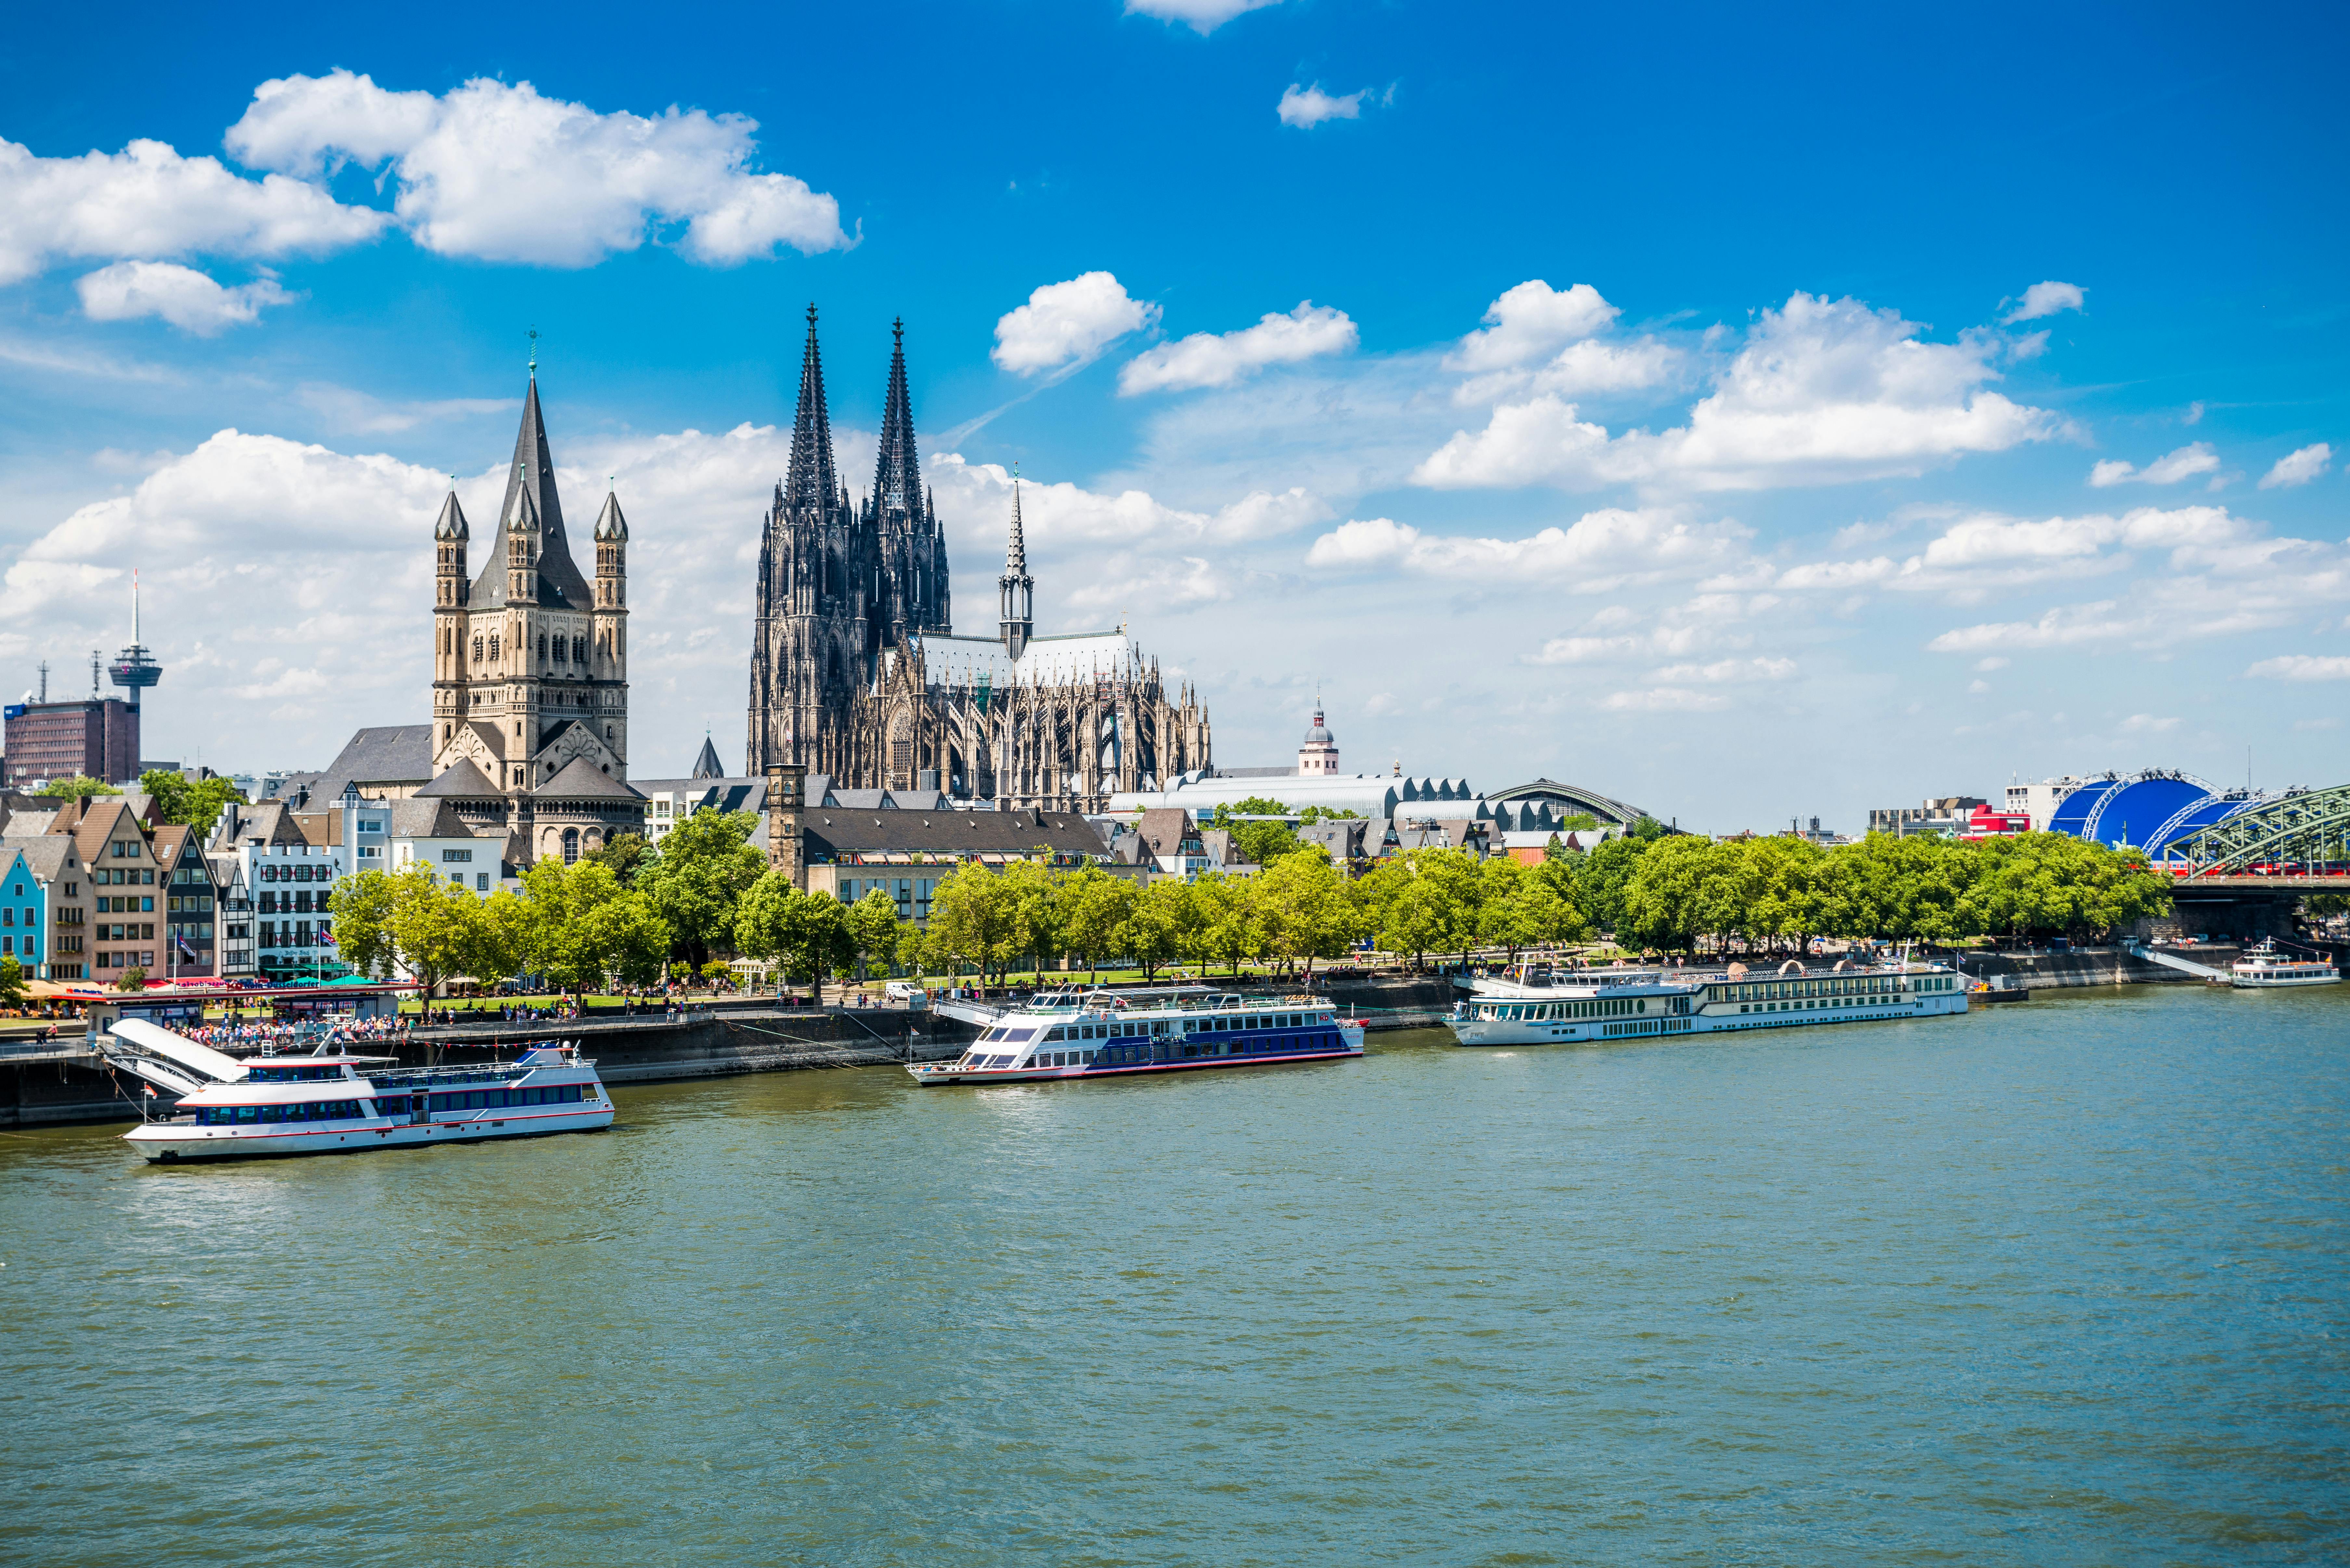 Rickshaw City tour through Cologne